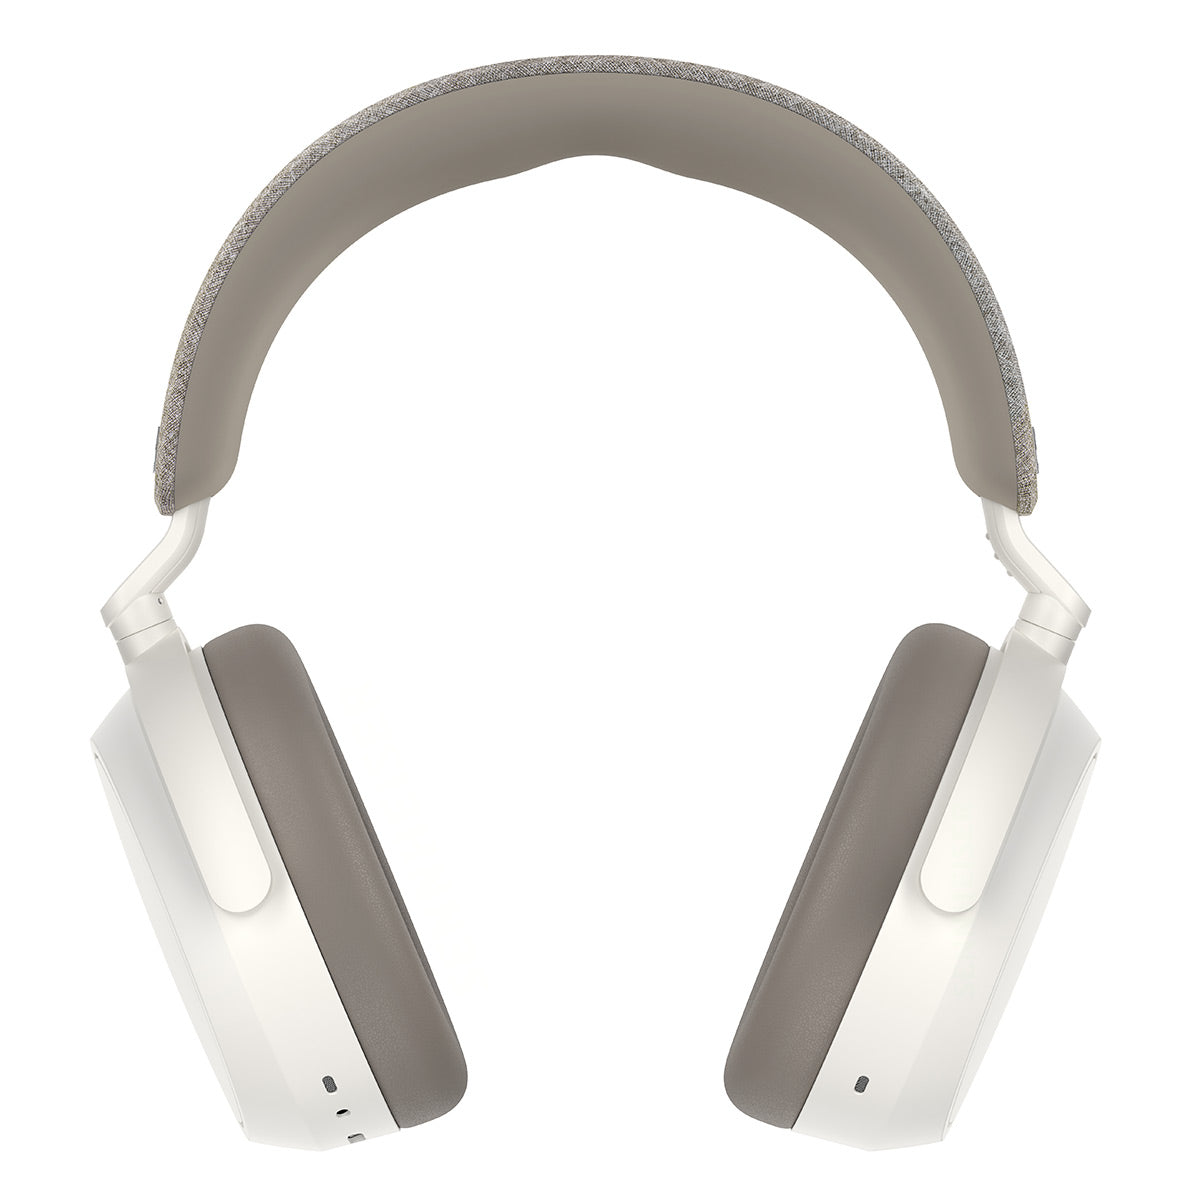 Sennheiser MOMENTUM 4 Wireless Bluetooth Over-Ear Headphones with Adaptive Noise Cancellation (White)